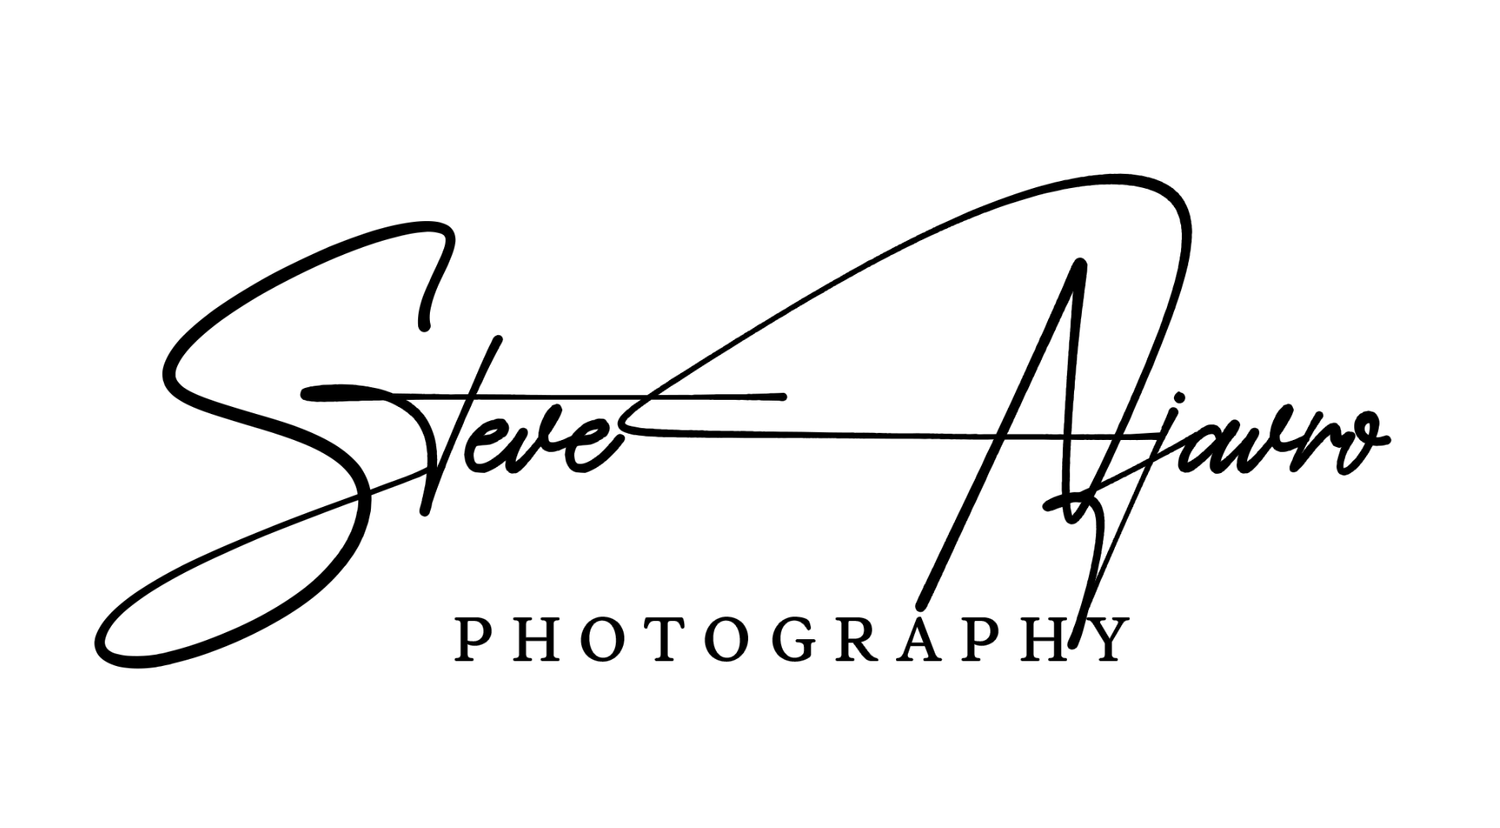 Commercial Photography| Steve Njavro Photography